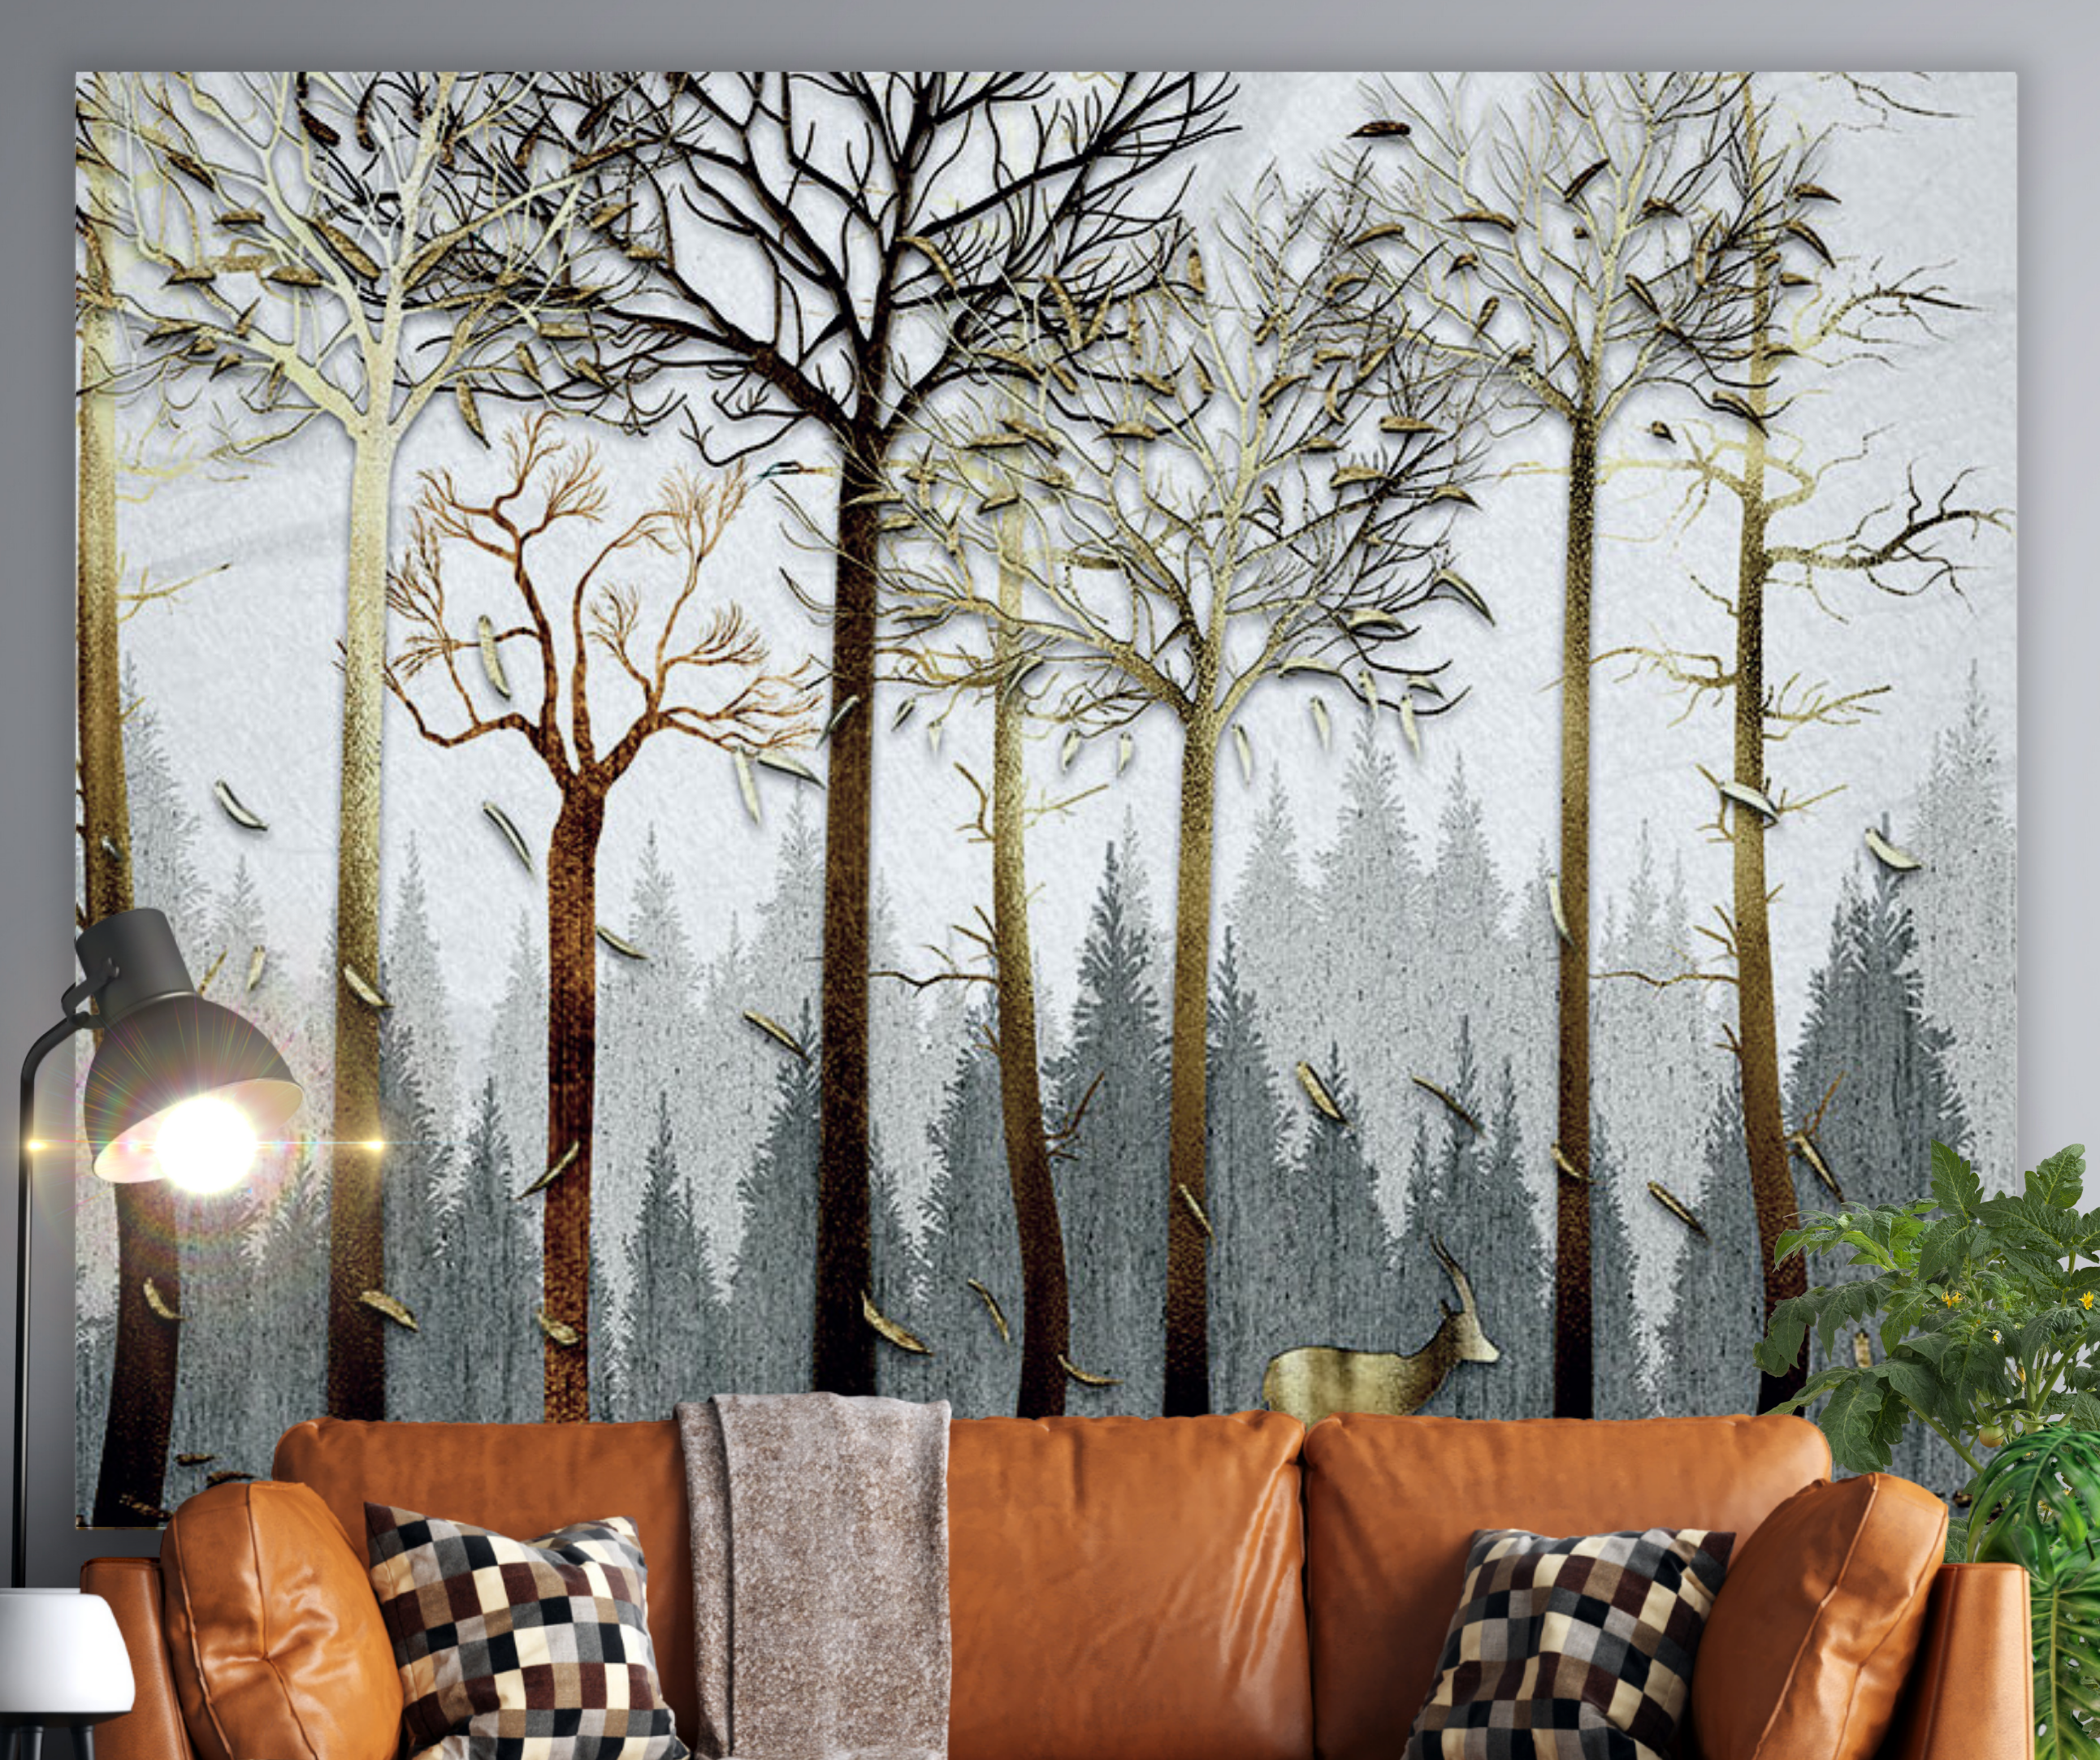 KaiSha Tapestry Wall Hanging; Wall Decor Winter Forest Trees Art Bedroom Nature Backdrop Wedding